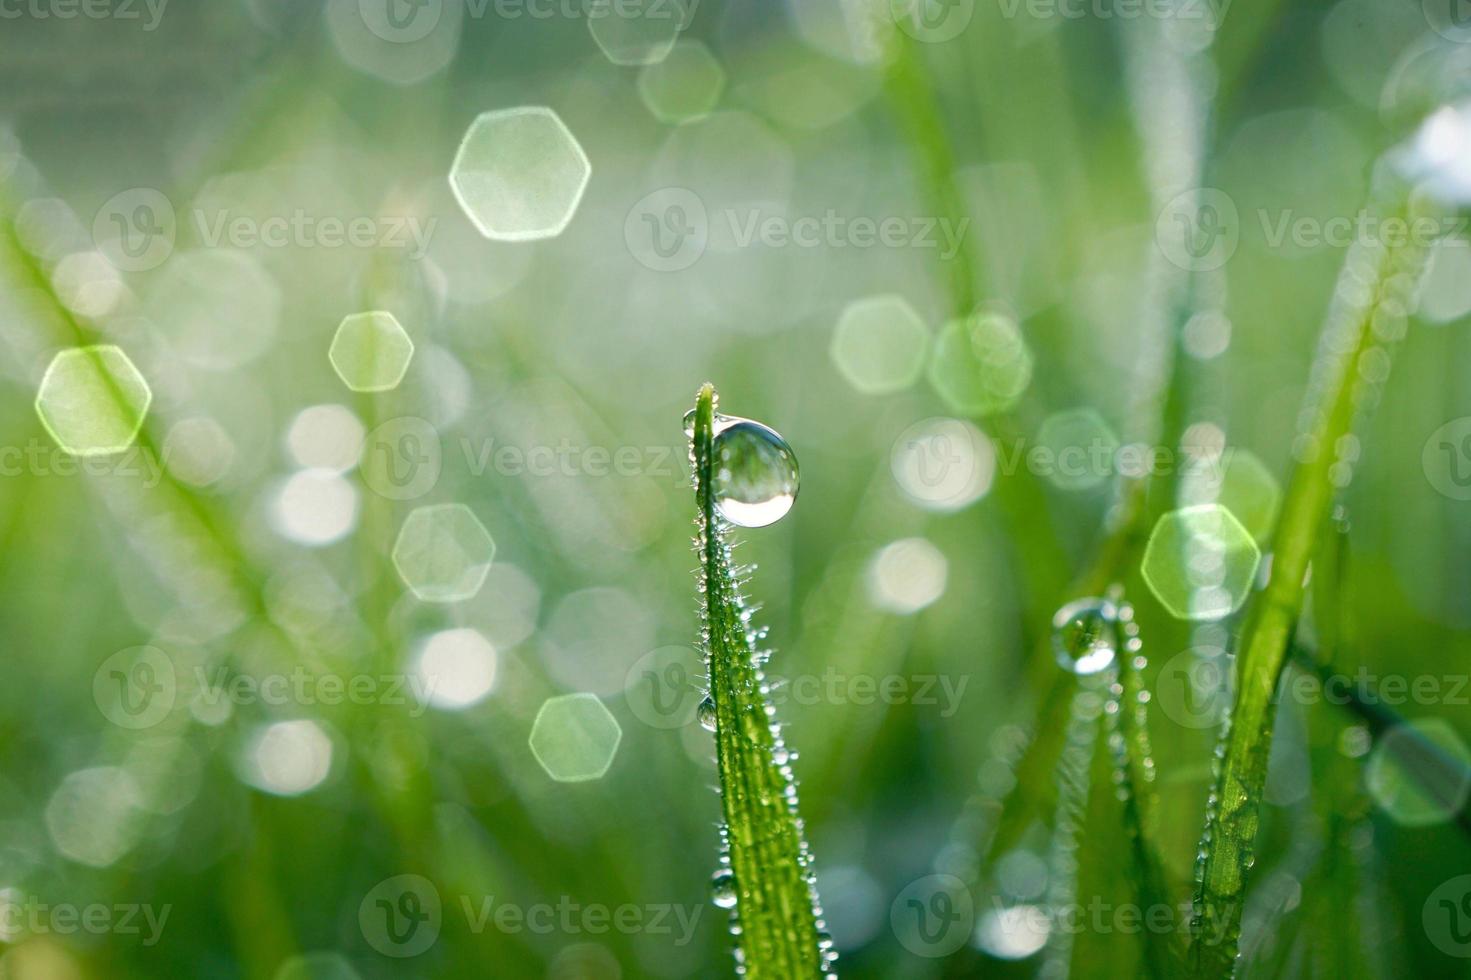 raindrop on the green grass in rainy days photo